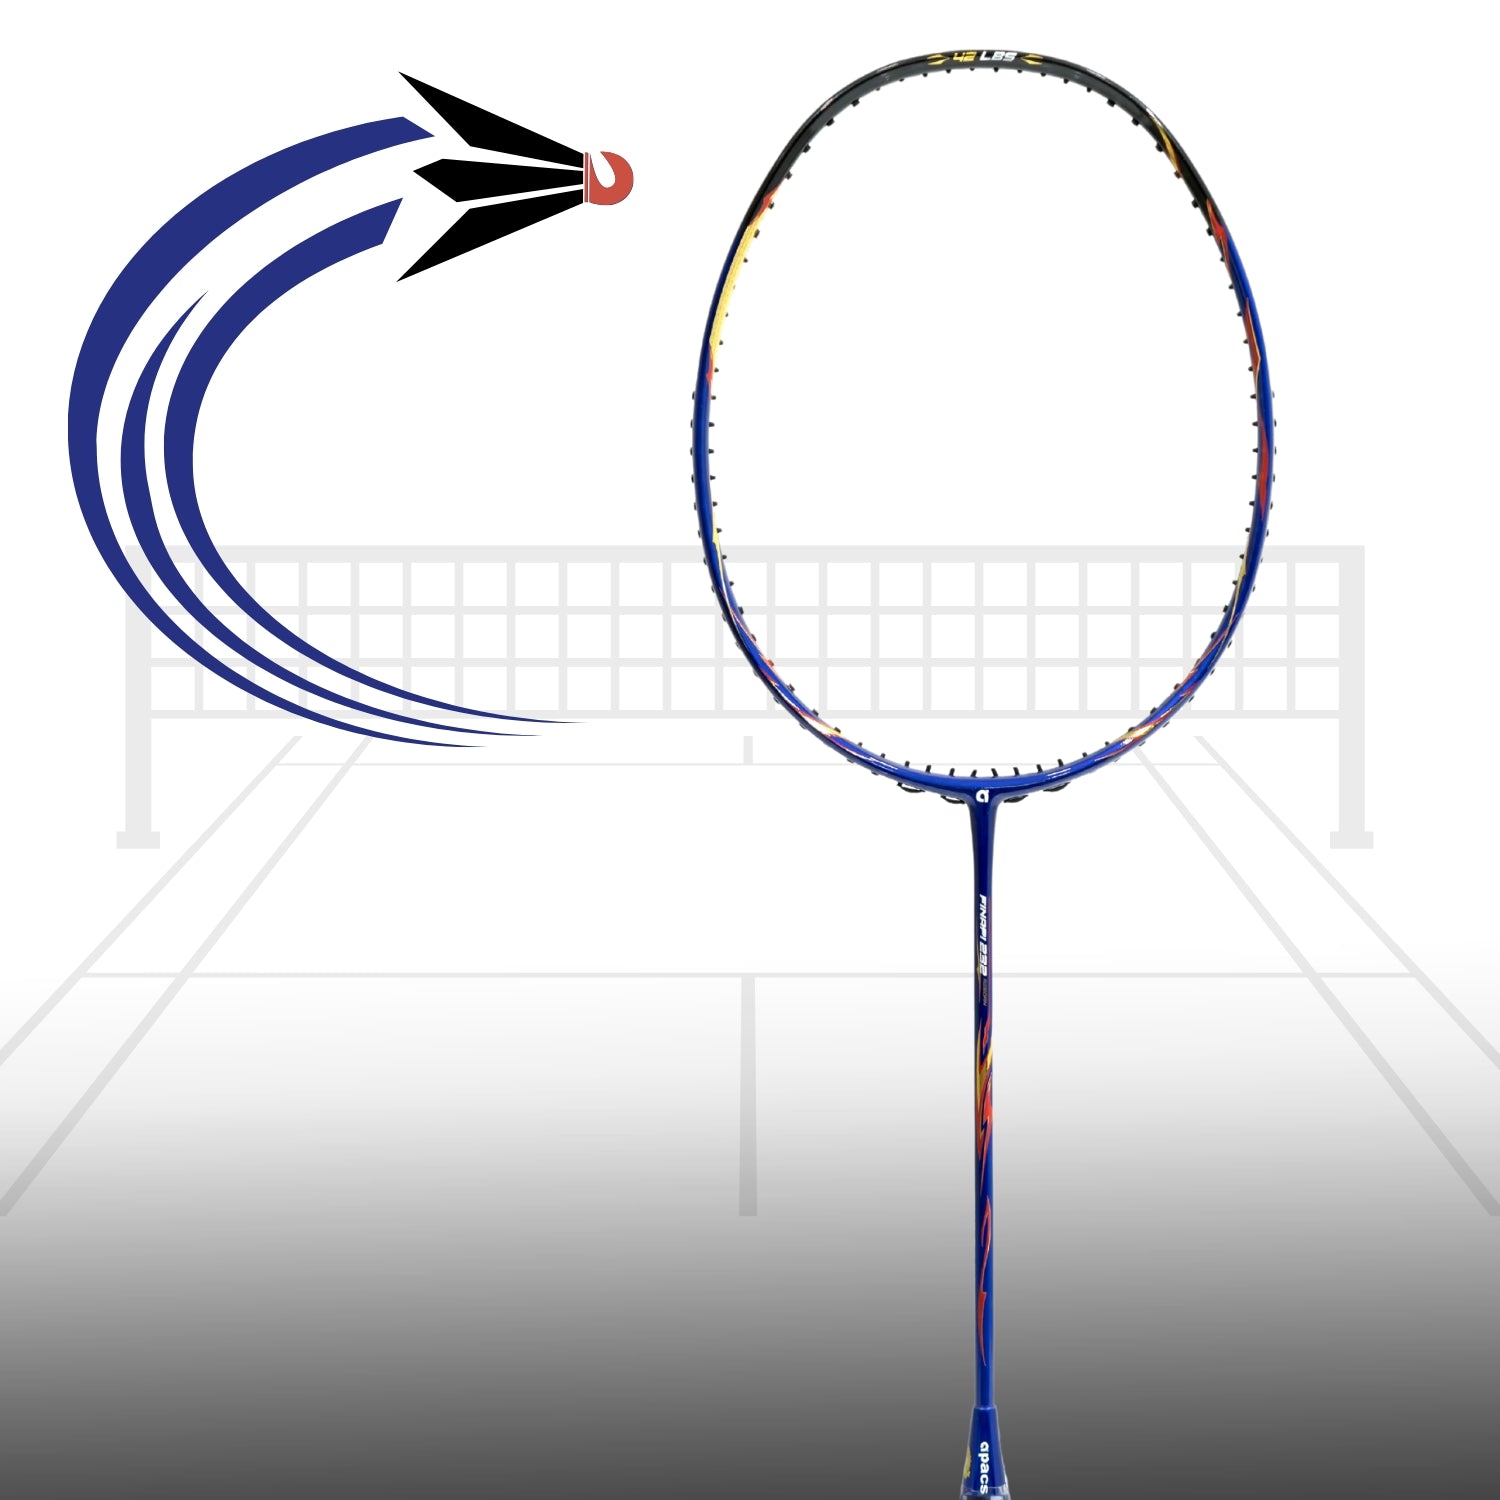 Apacs  Finapi 232 Reborn Badminton Racket - Without Cover - Best Price online Prokicksports.com